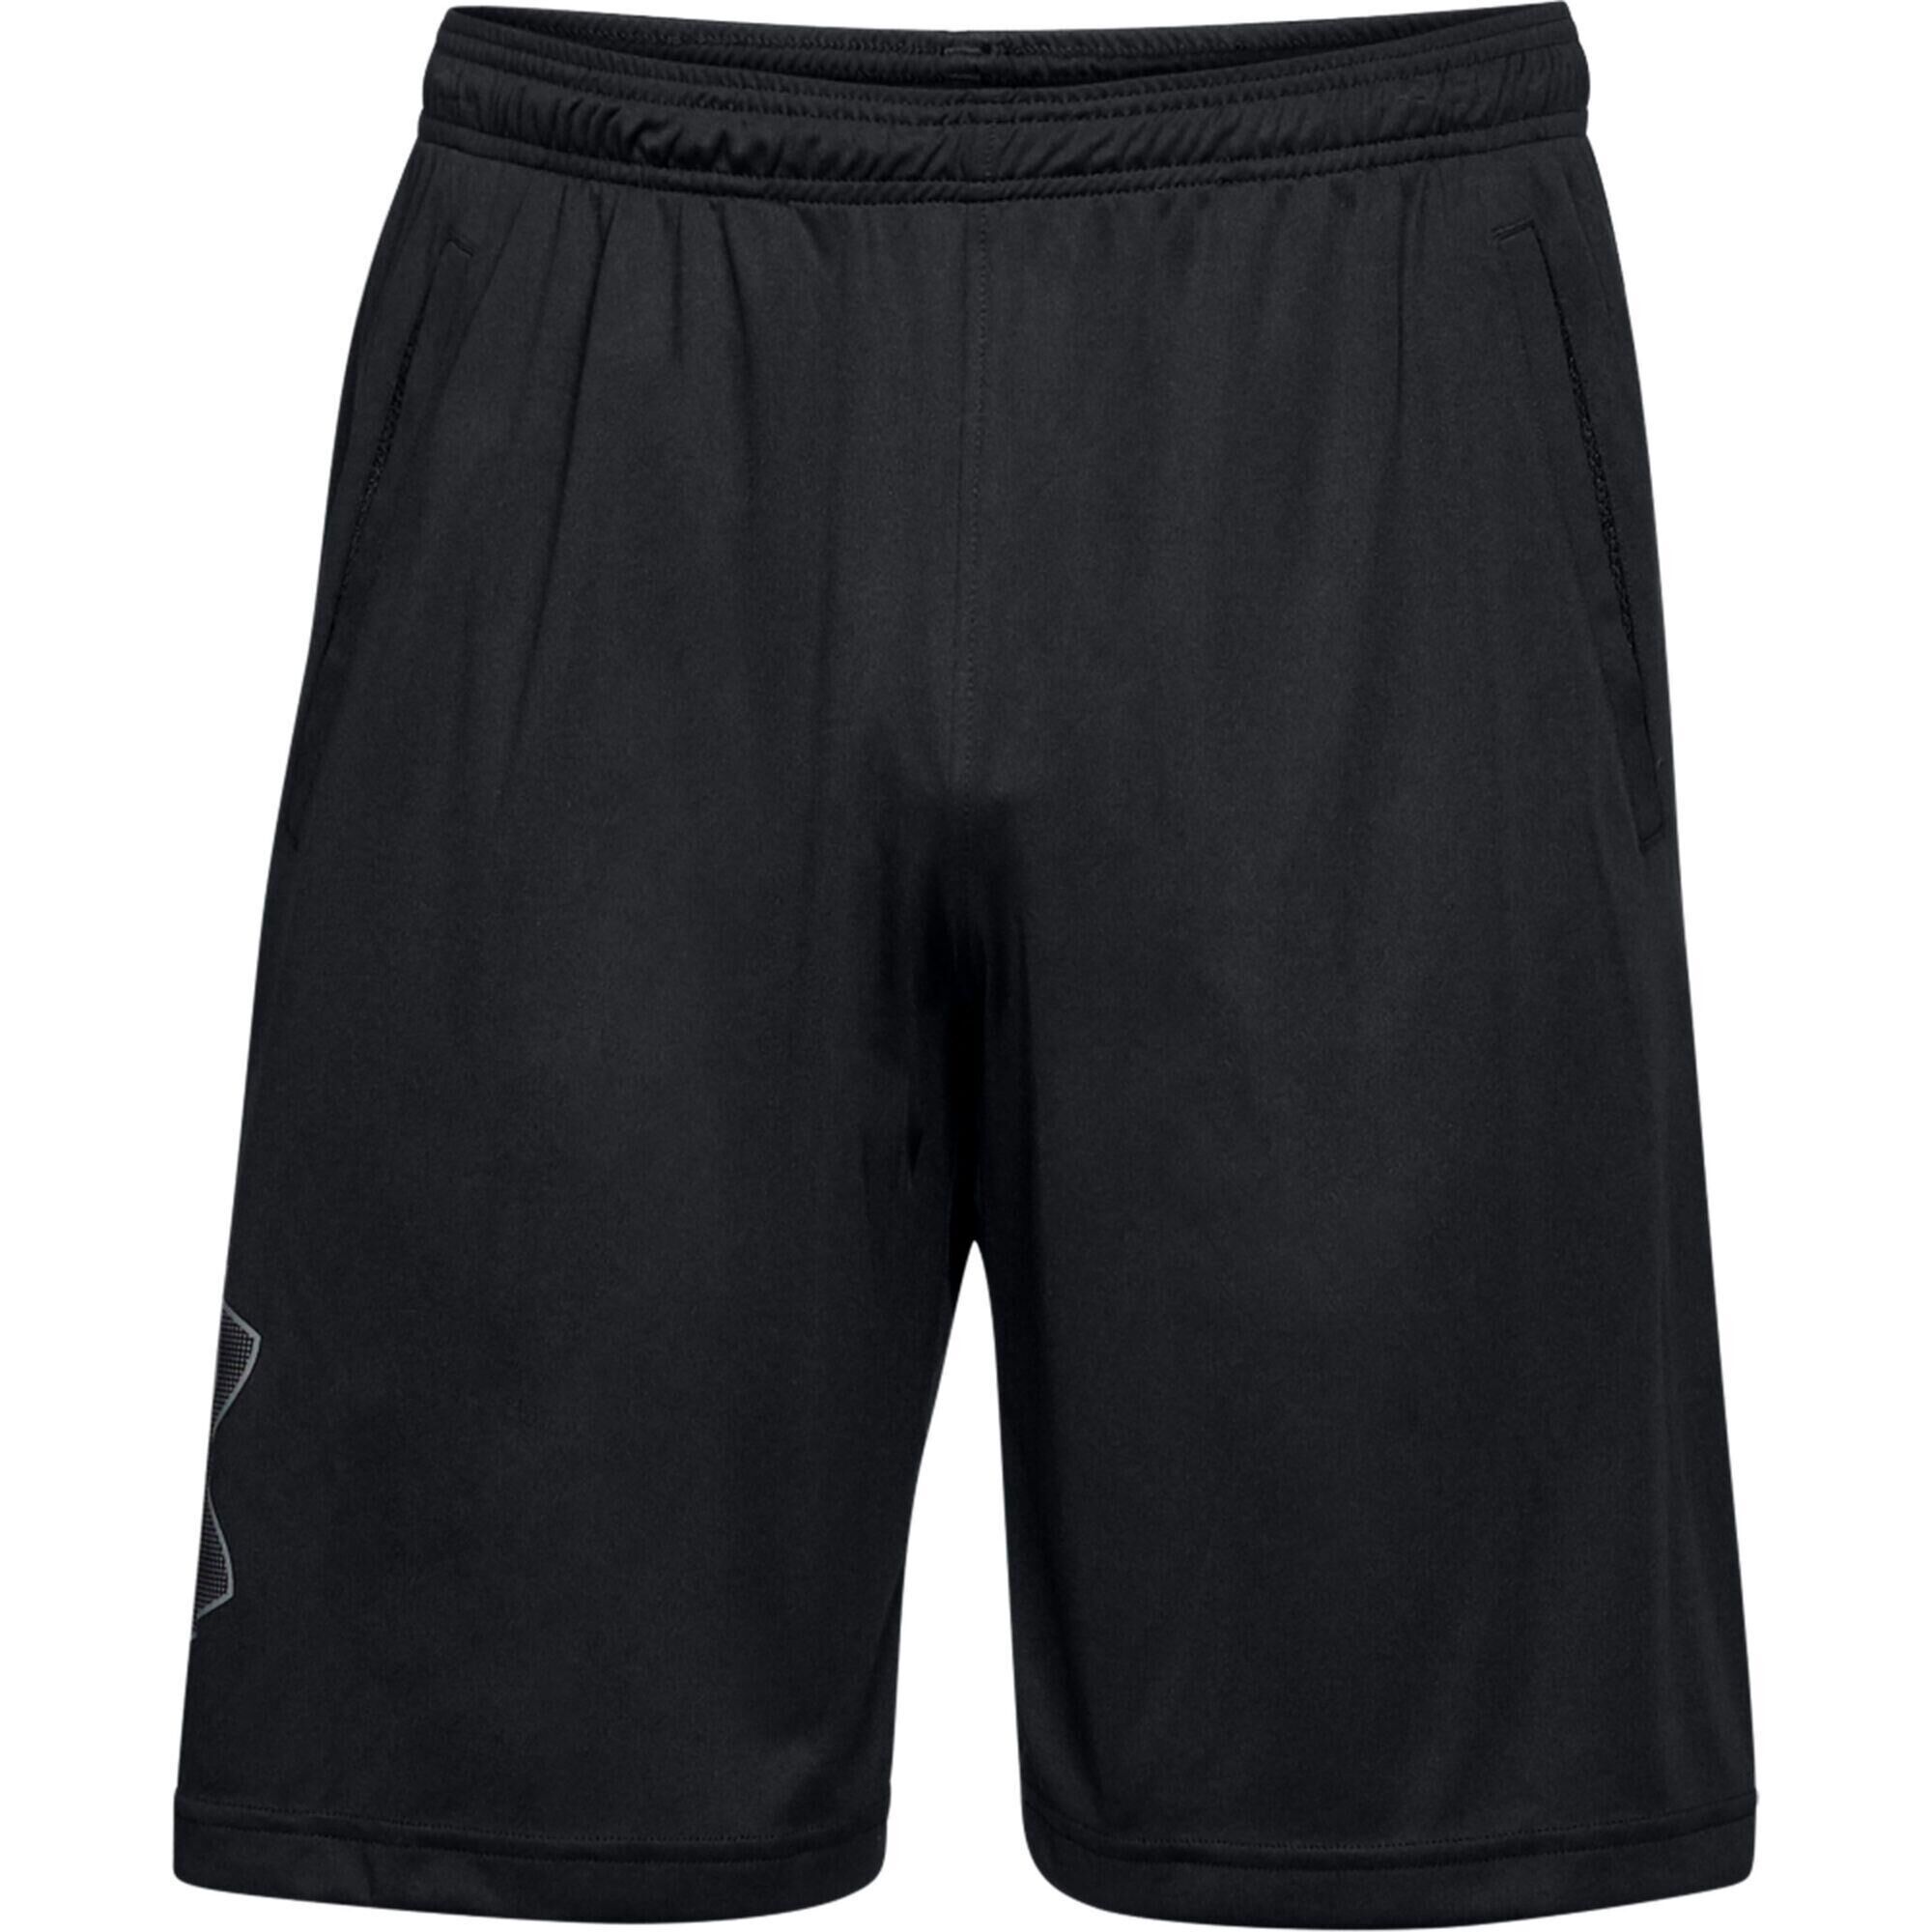 UNDER ARMOUR Mens Tech Shorts (Black/Light Graphite)